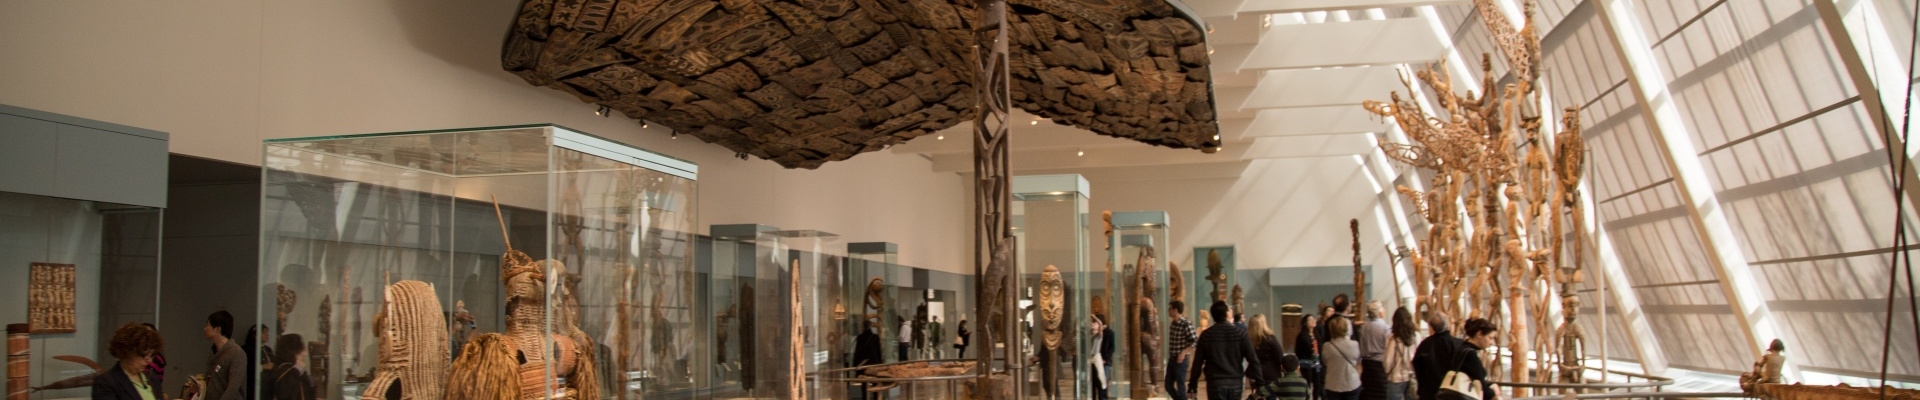 Gallery in the Metropolitan Museum of Art